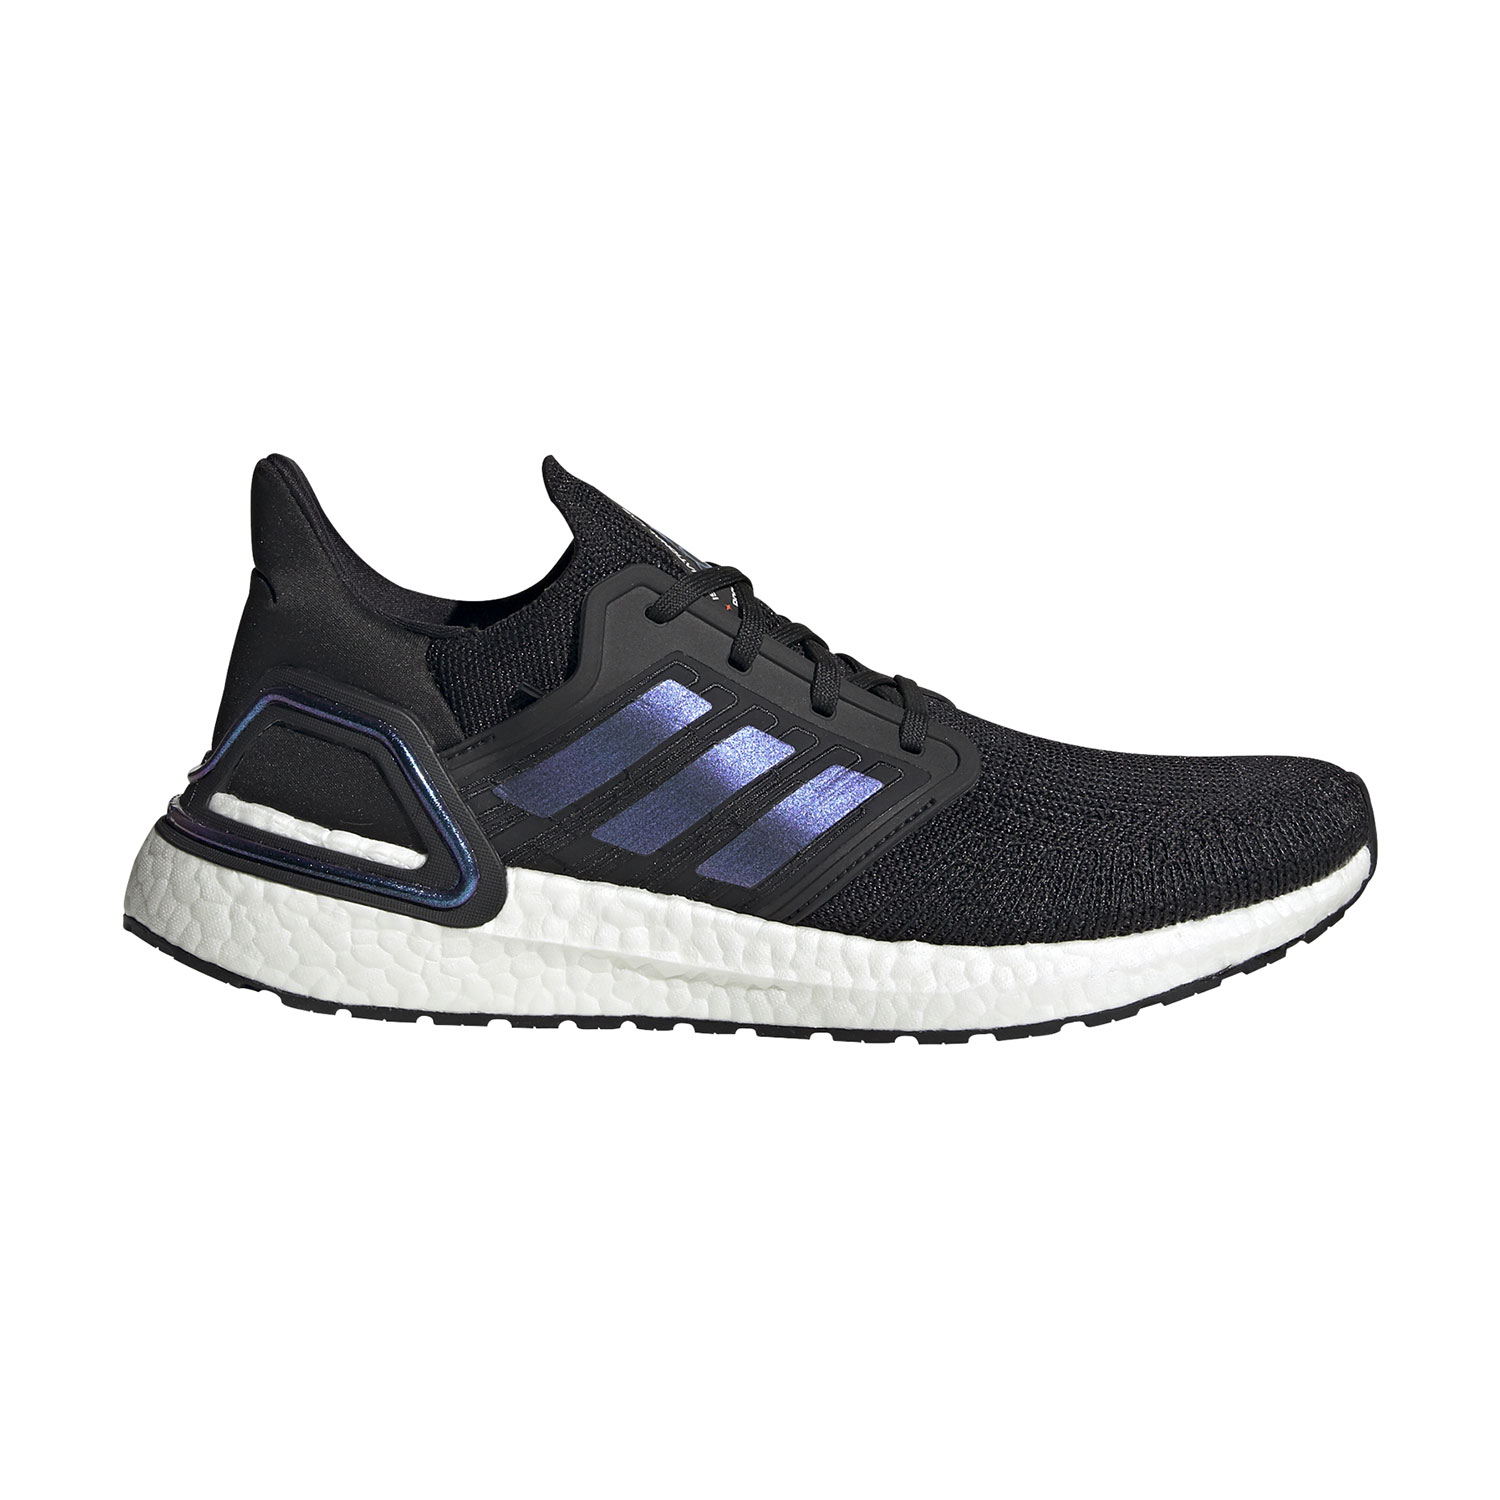 Adidas Ultraboost 20 Men's Running Shoes - Core Black